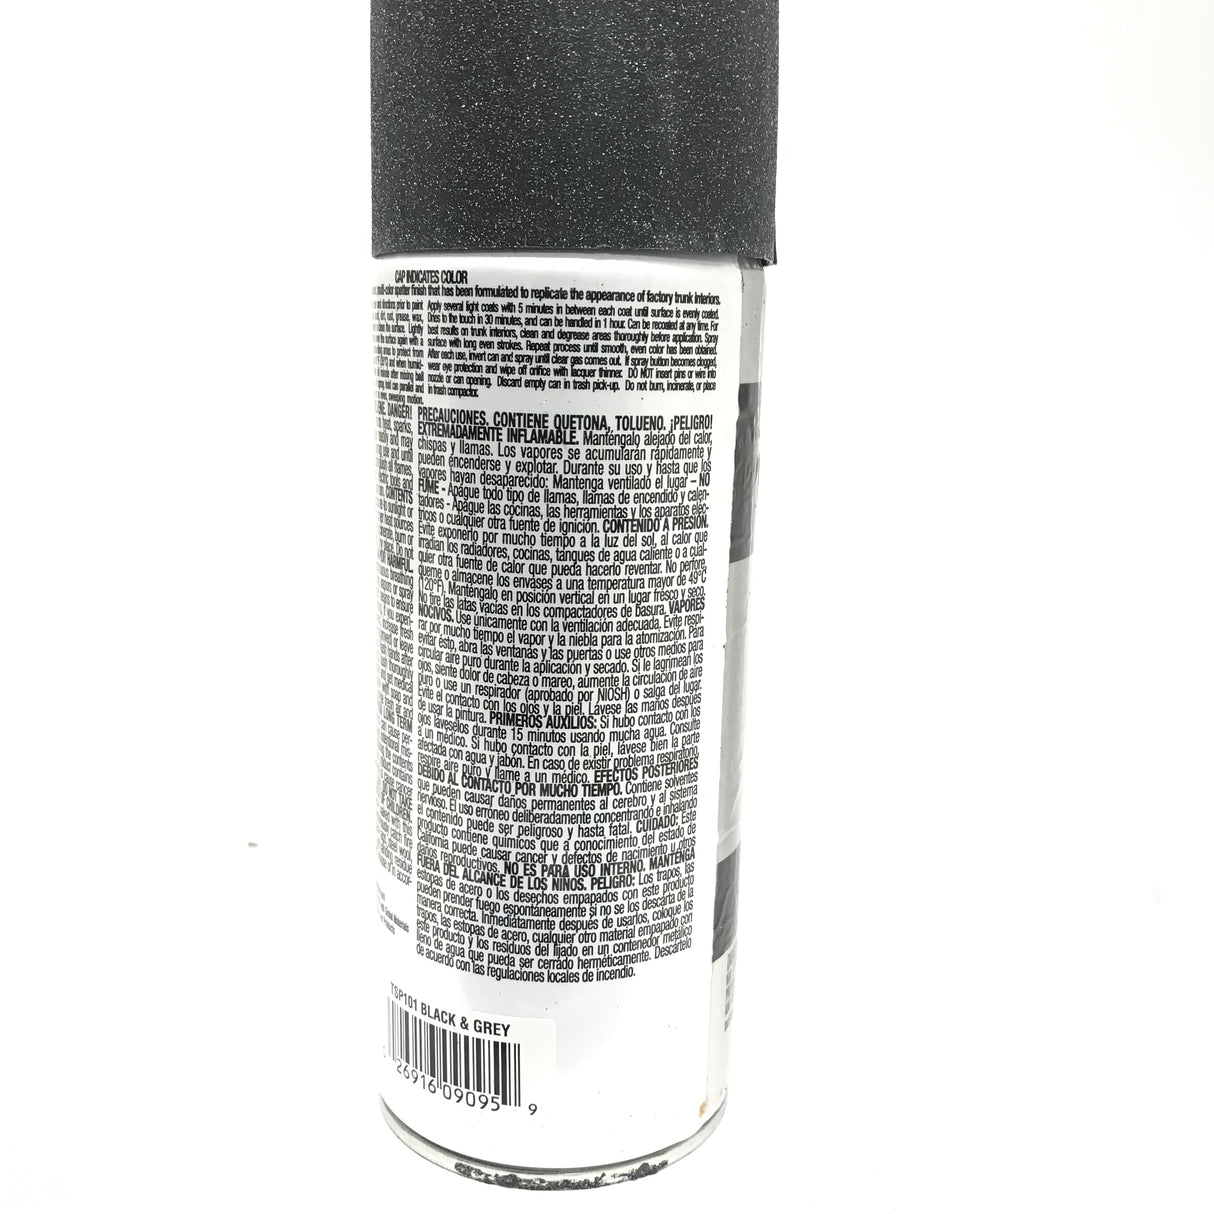 Duplicolor TSP101-4 PACK Black & Grey Trunk Paint -Water Resistant Durable -11oz